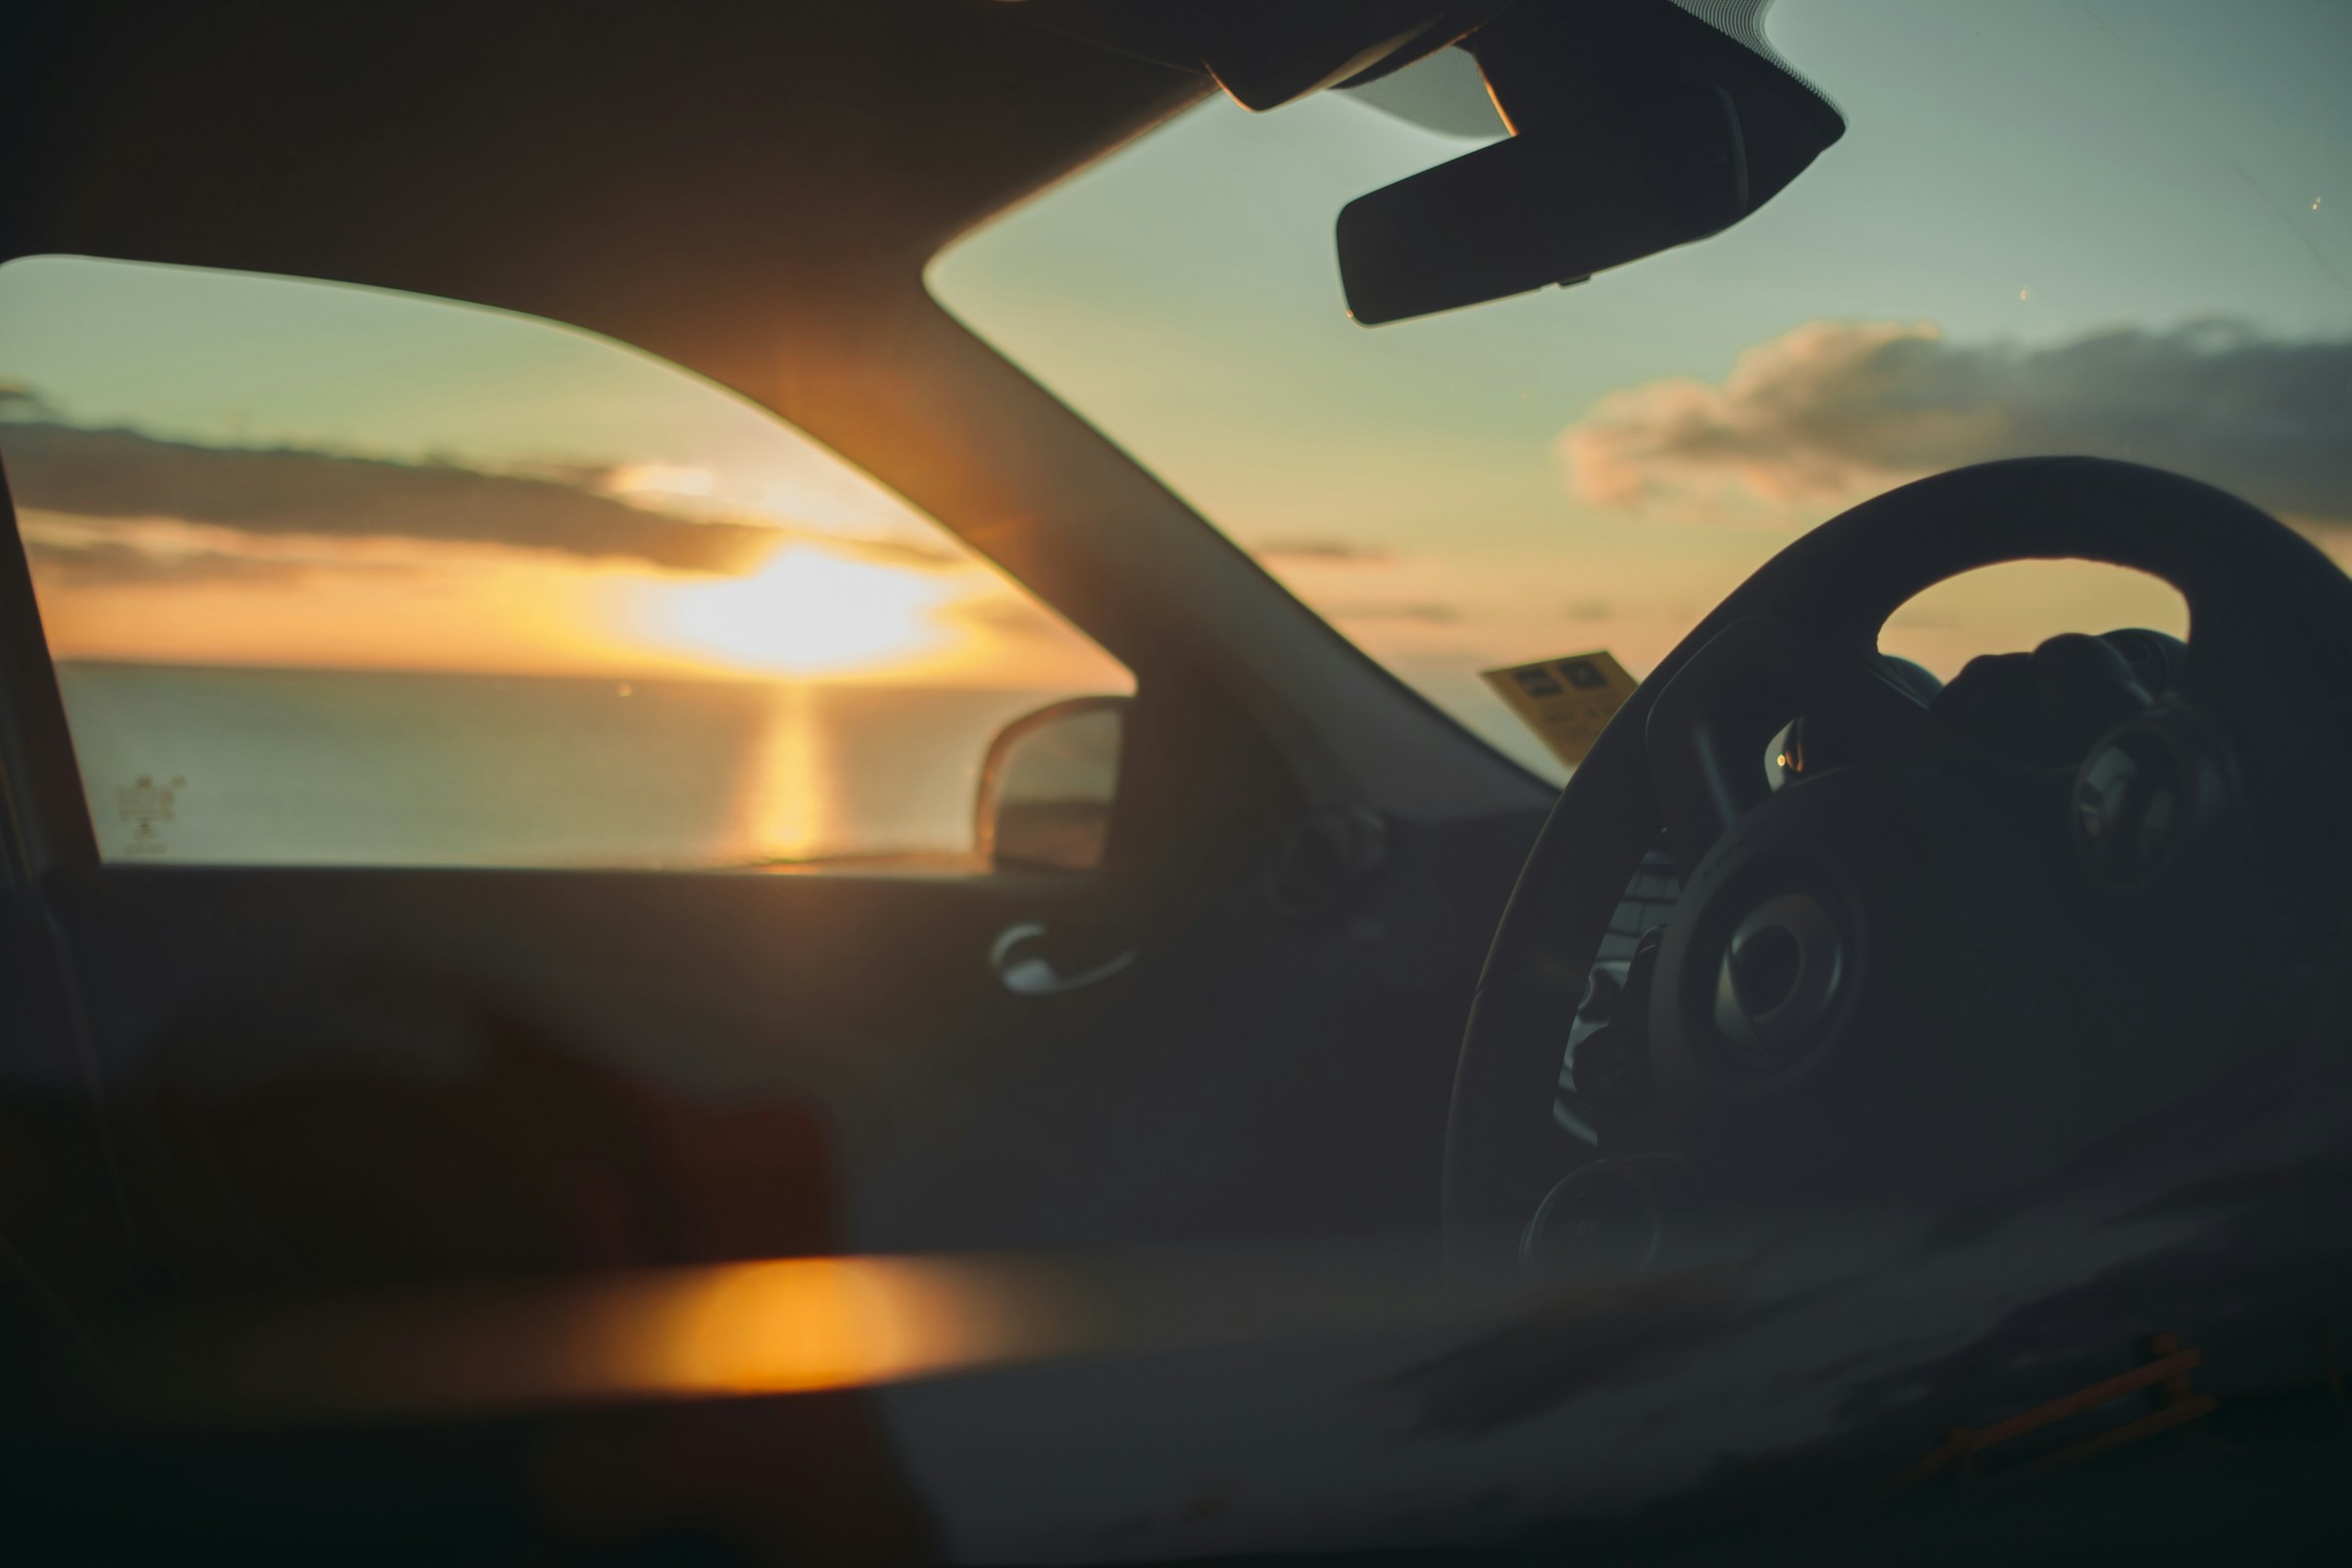 A sunset through a car window | Source: Unsplash